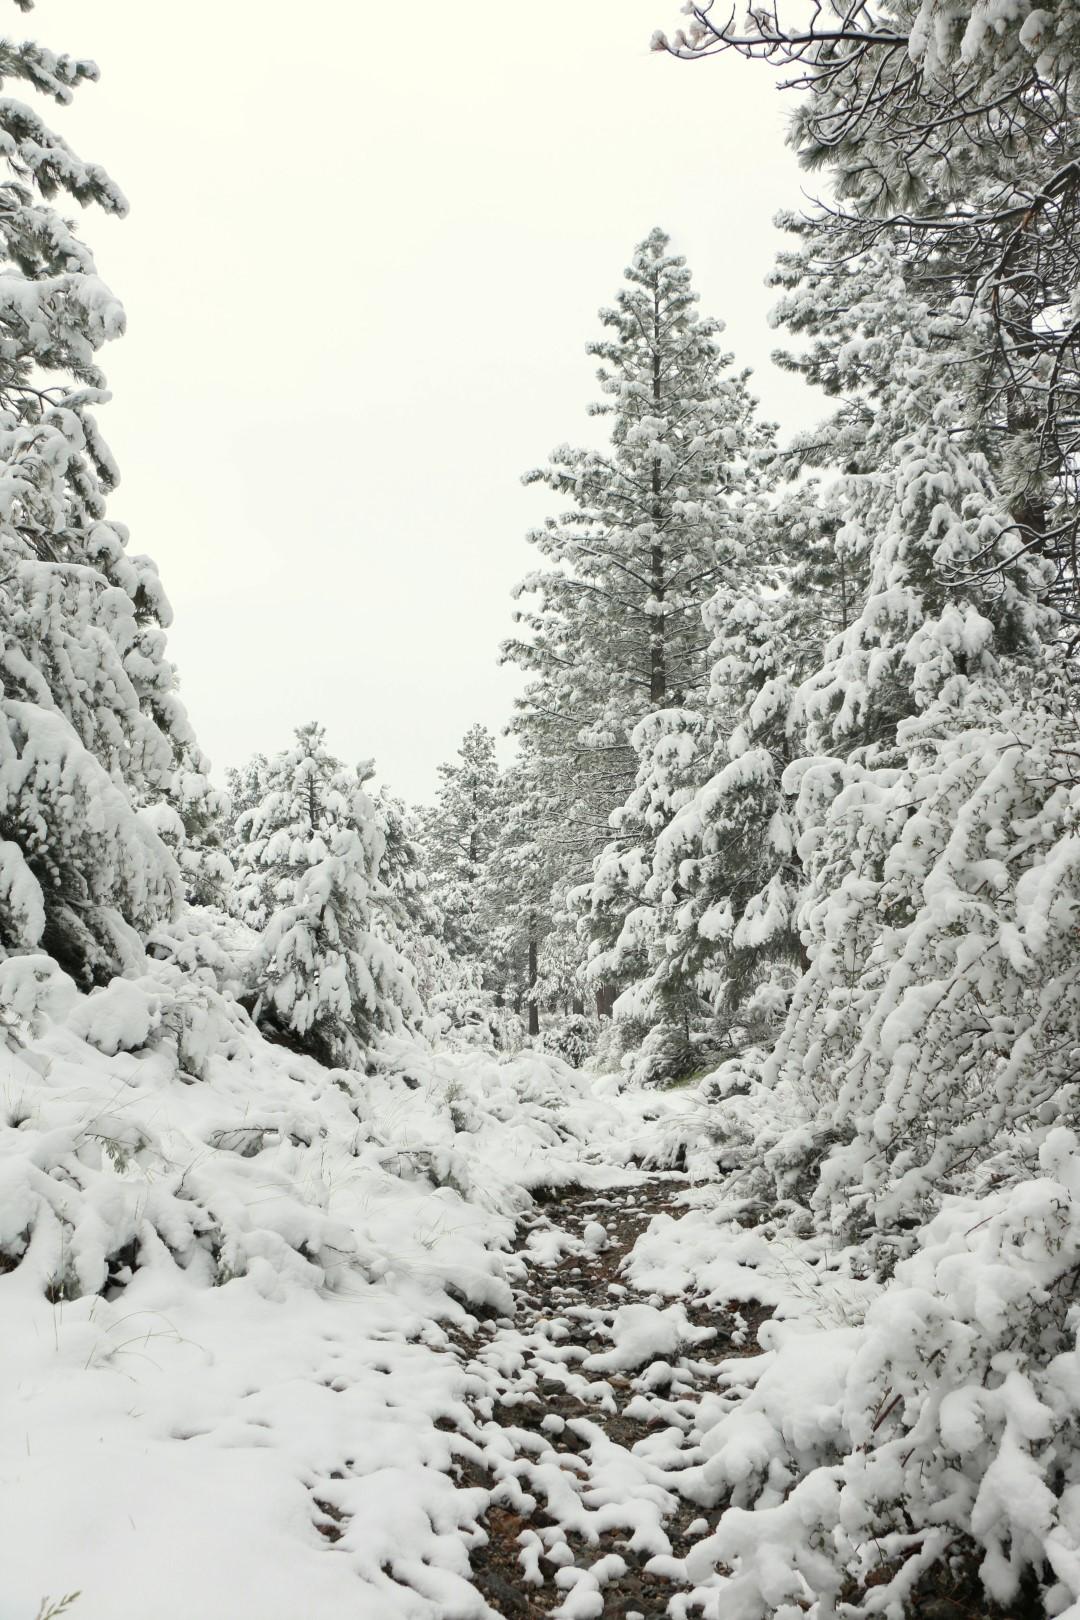 photo of snowy scene